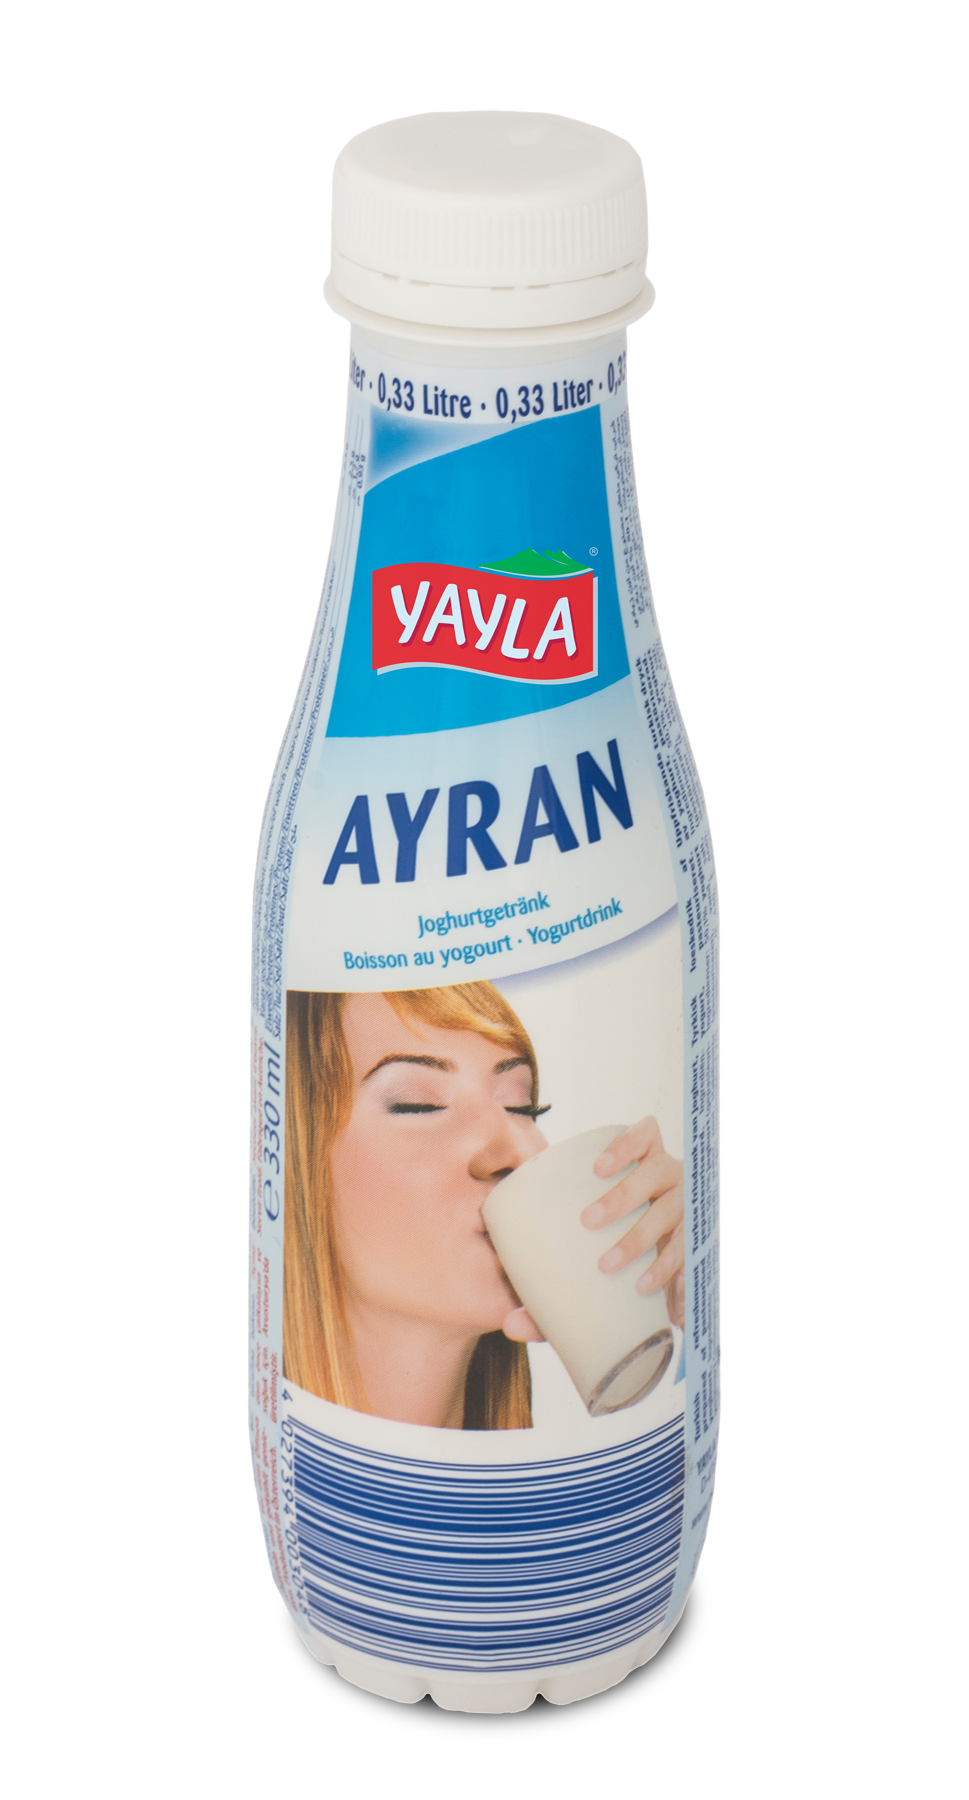 Ayran-Joghurt-Drink nach türki­scher Art